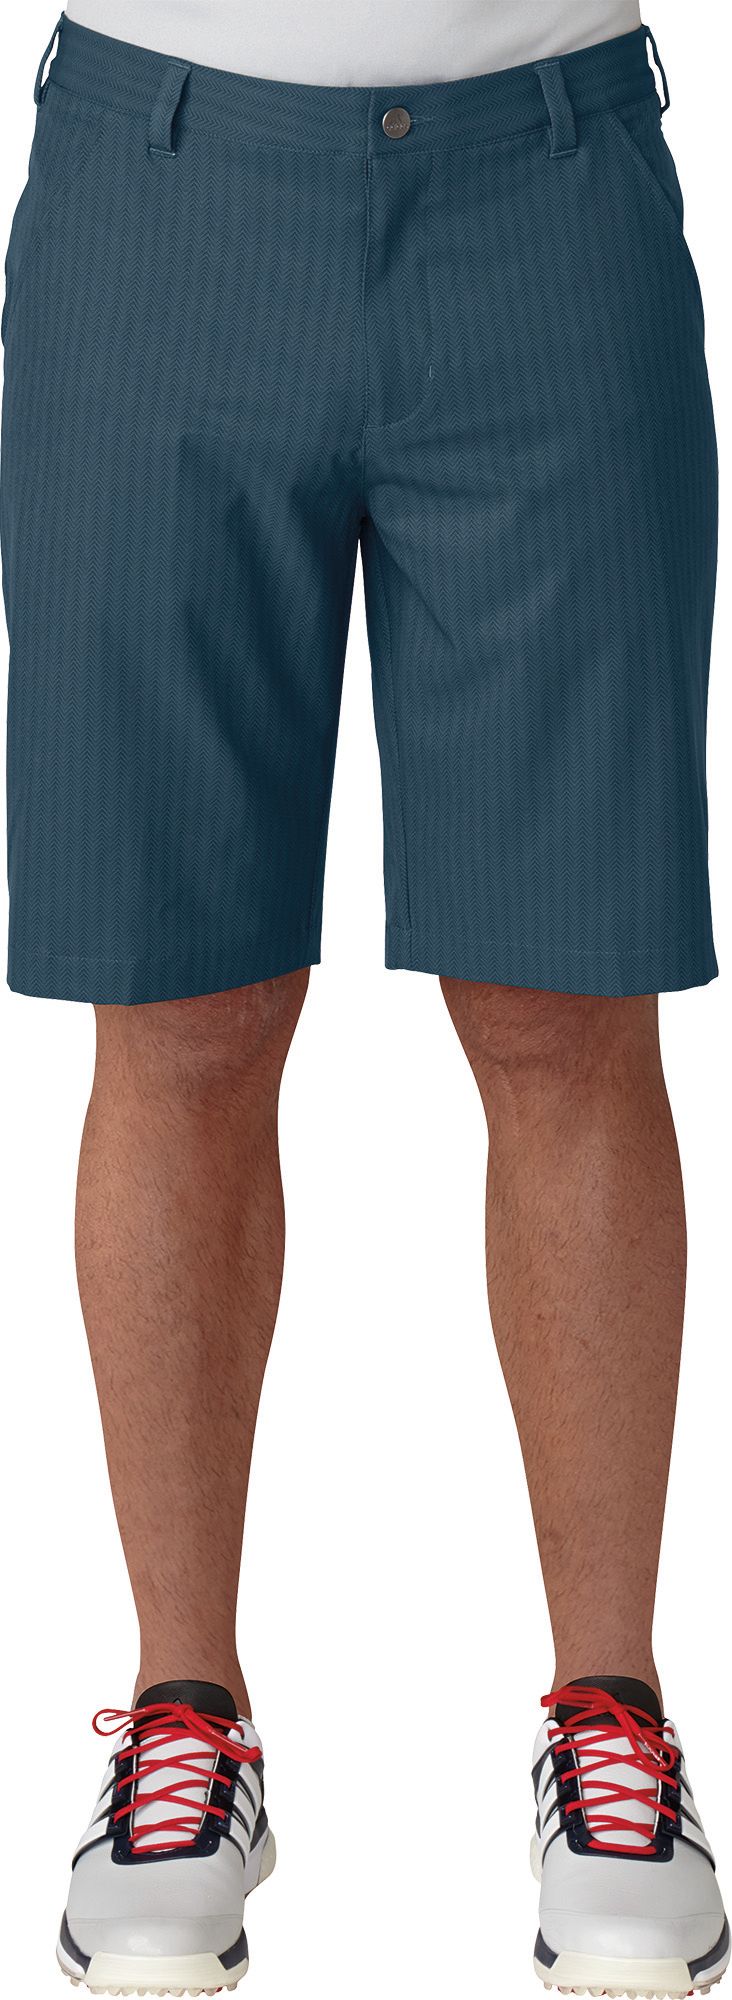 adidas Men's Ultimate Dot Herringbone Shorts - .97 - .97